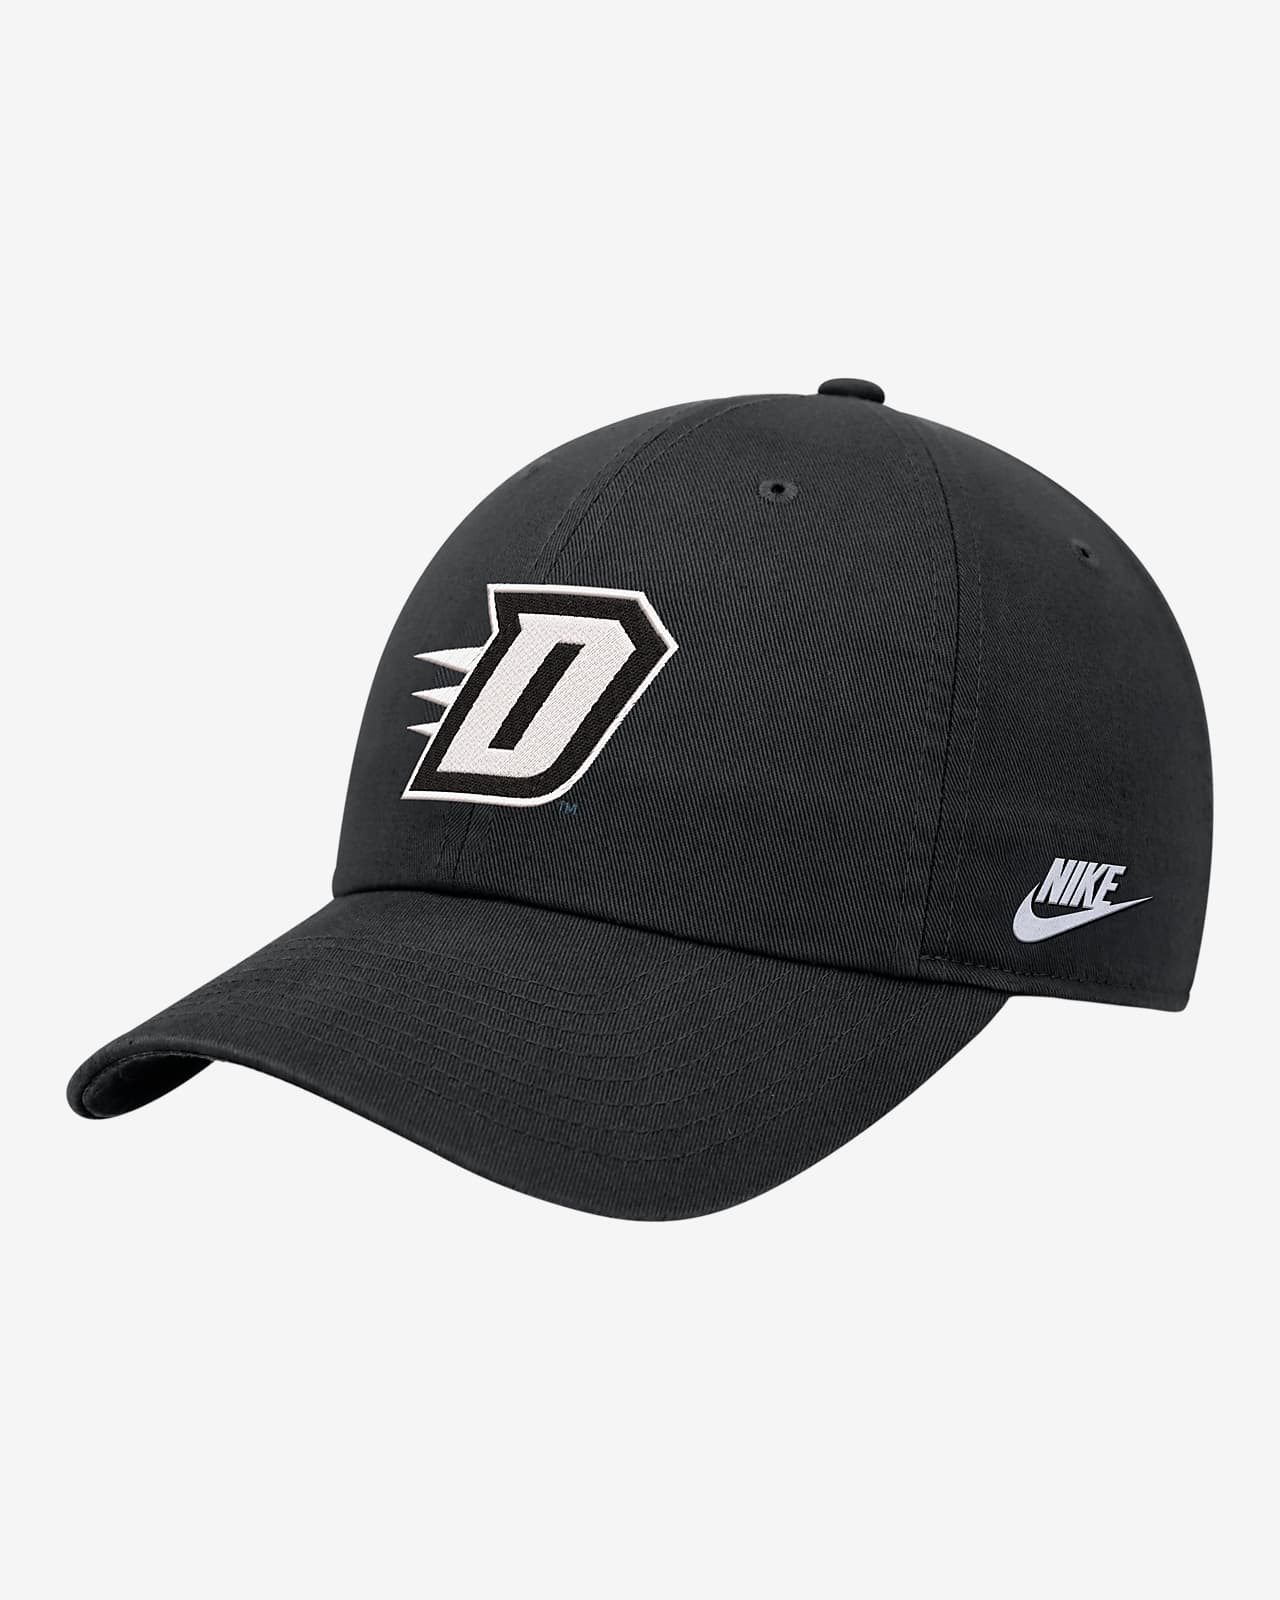 Gorra universitaria Nike DePaul